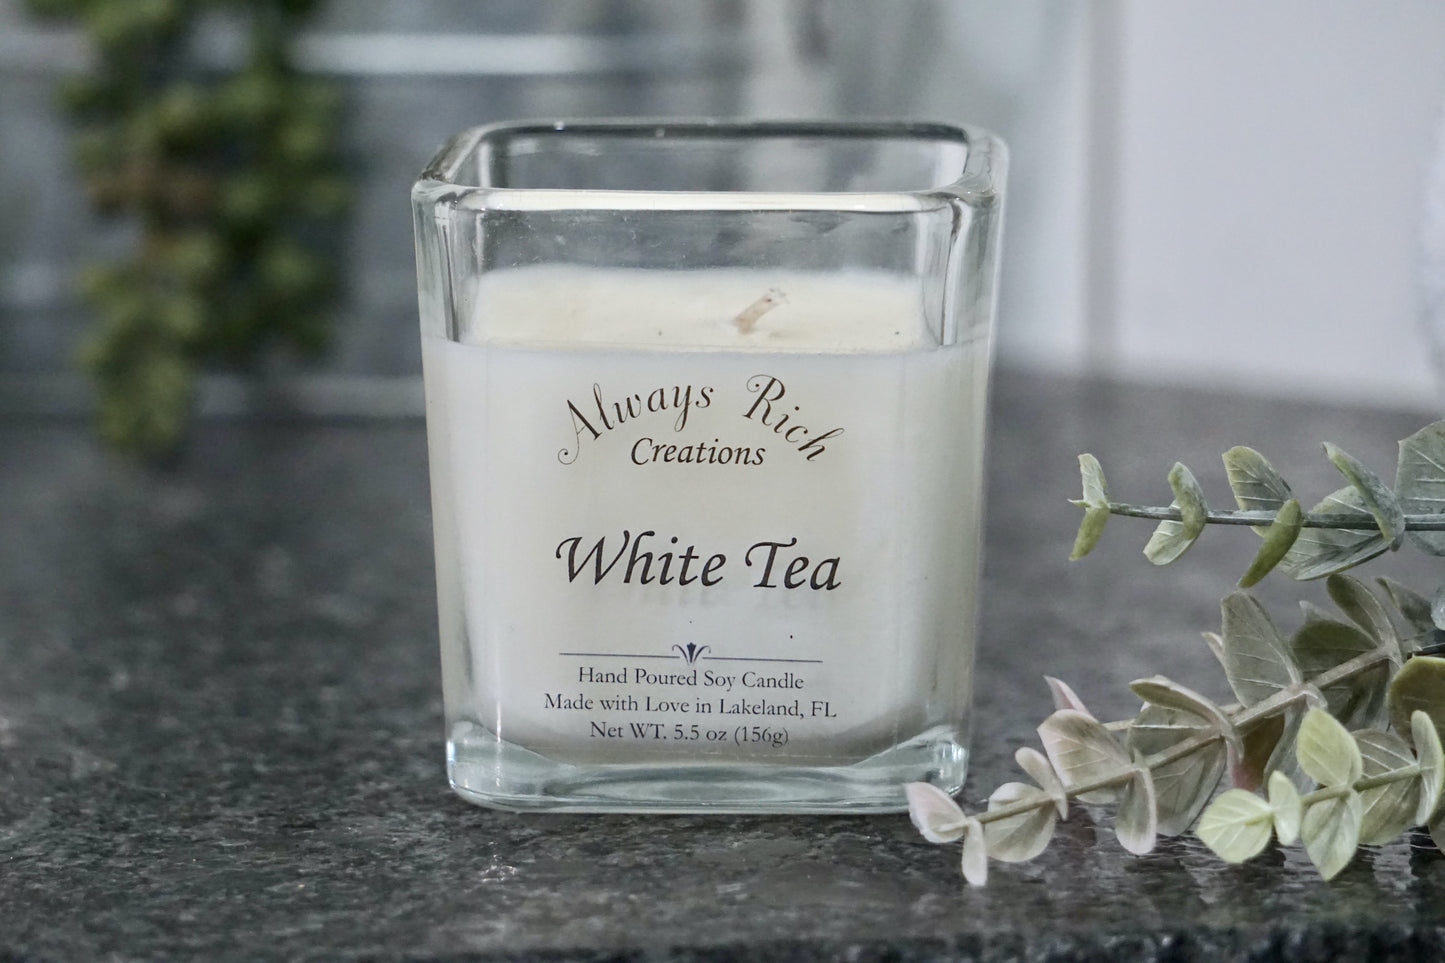 White Tea Collection